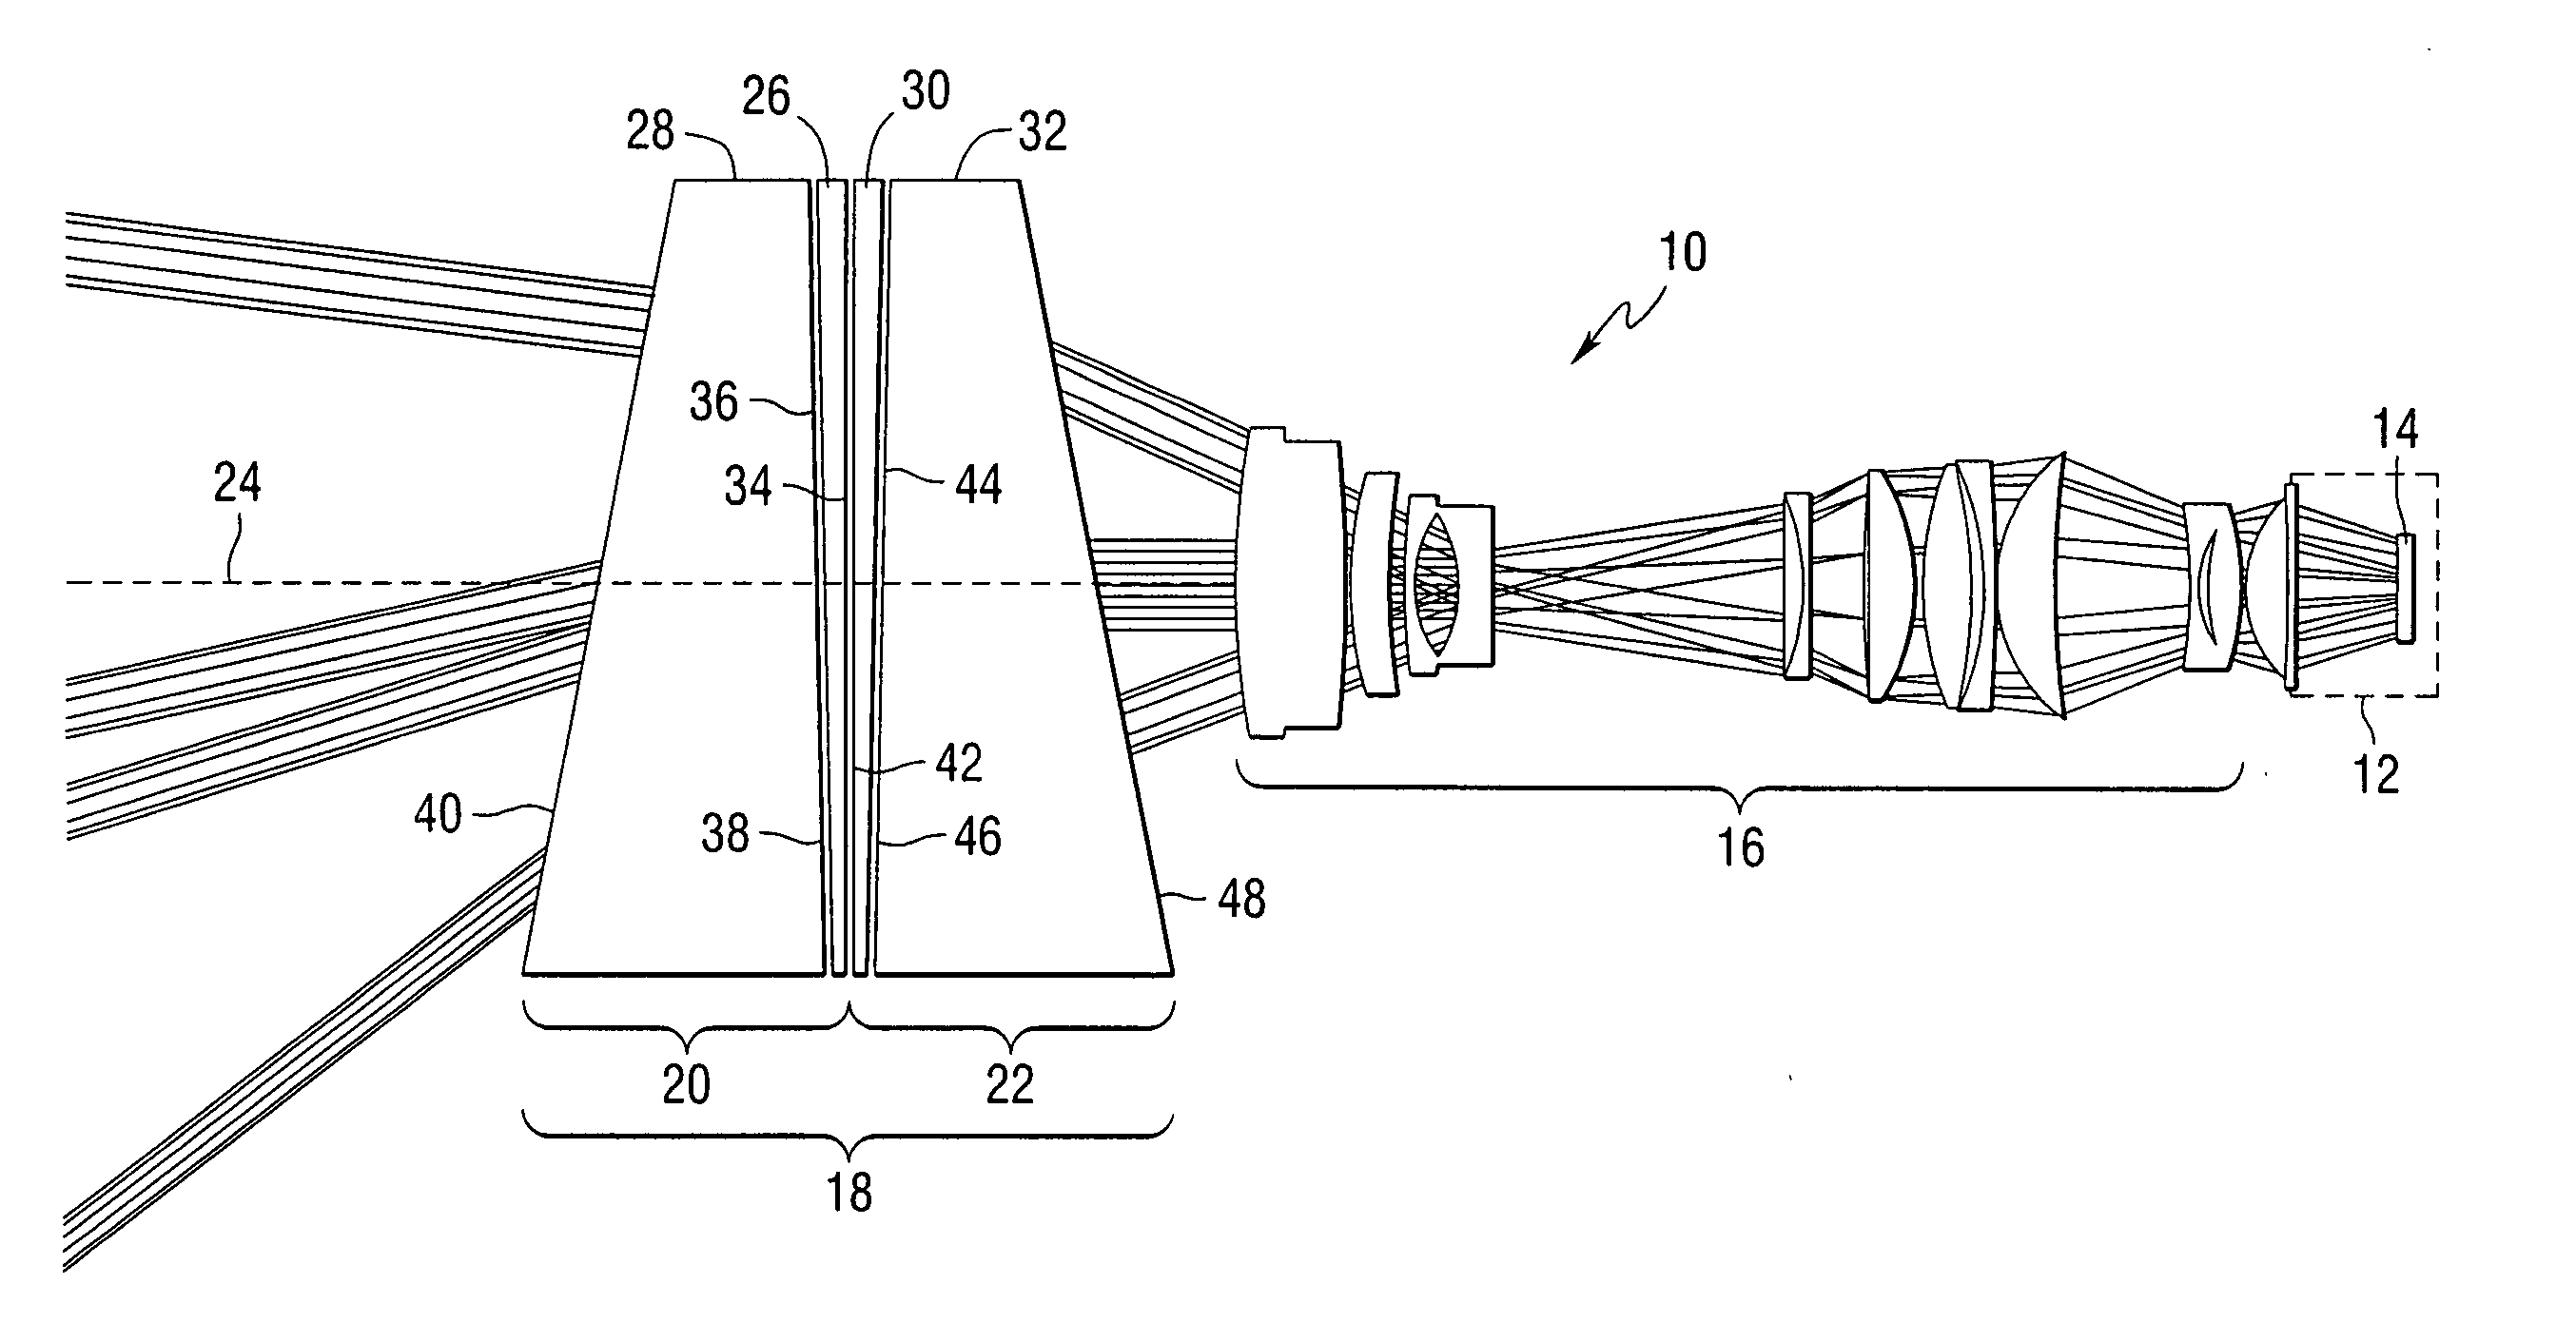 Pan and tilt apparatus using achromatic prisms